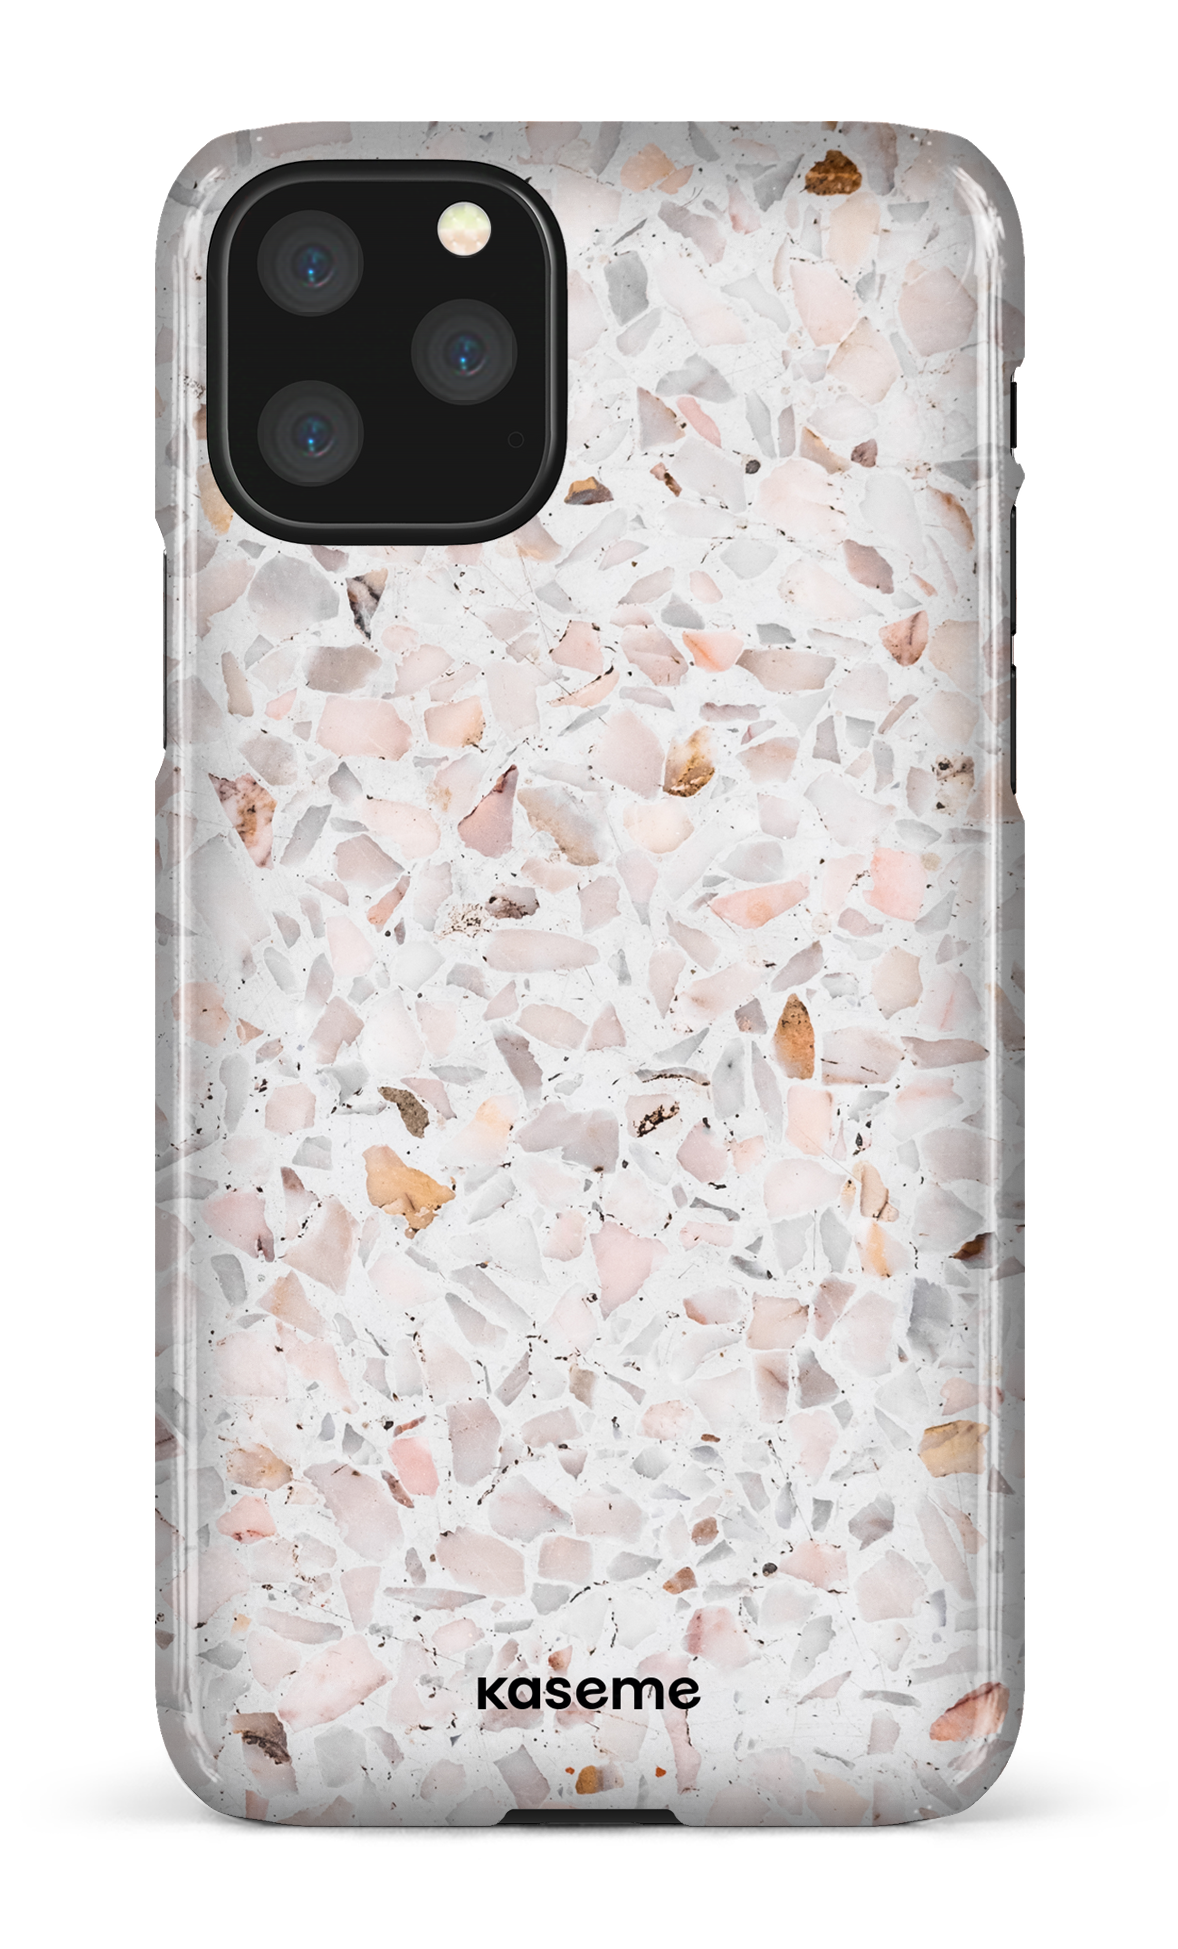 Frozen stone - iPhone 11 Pro